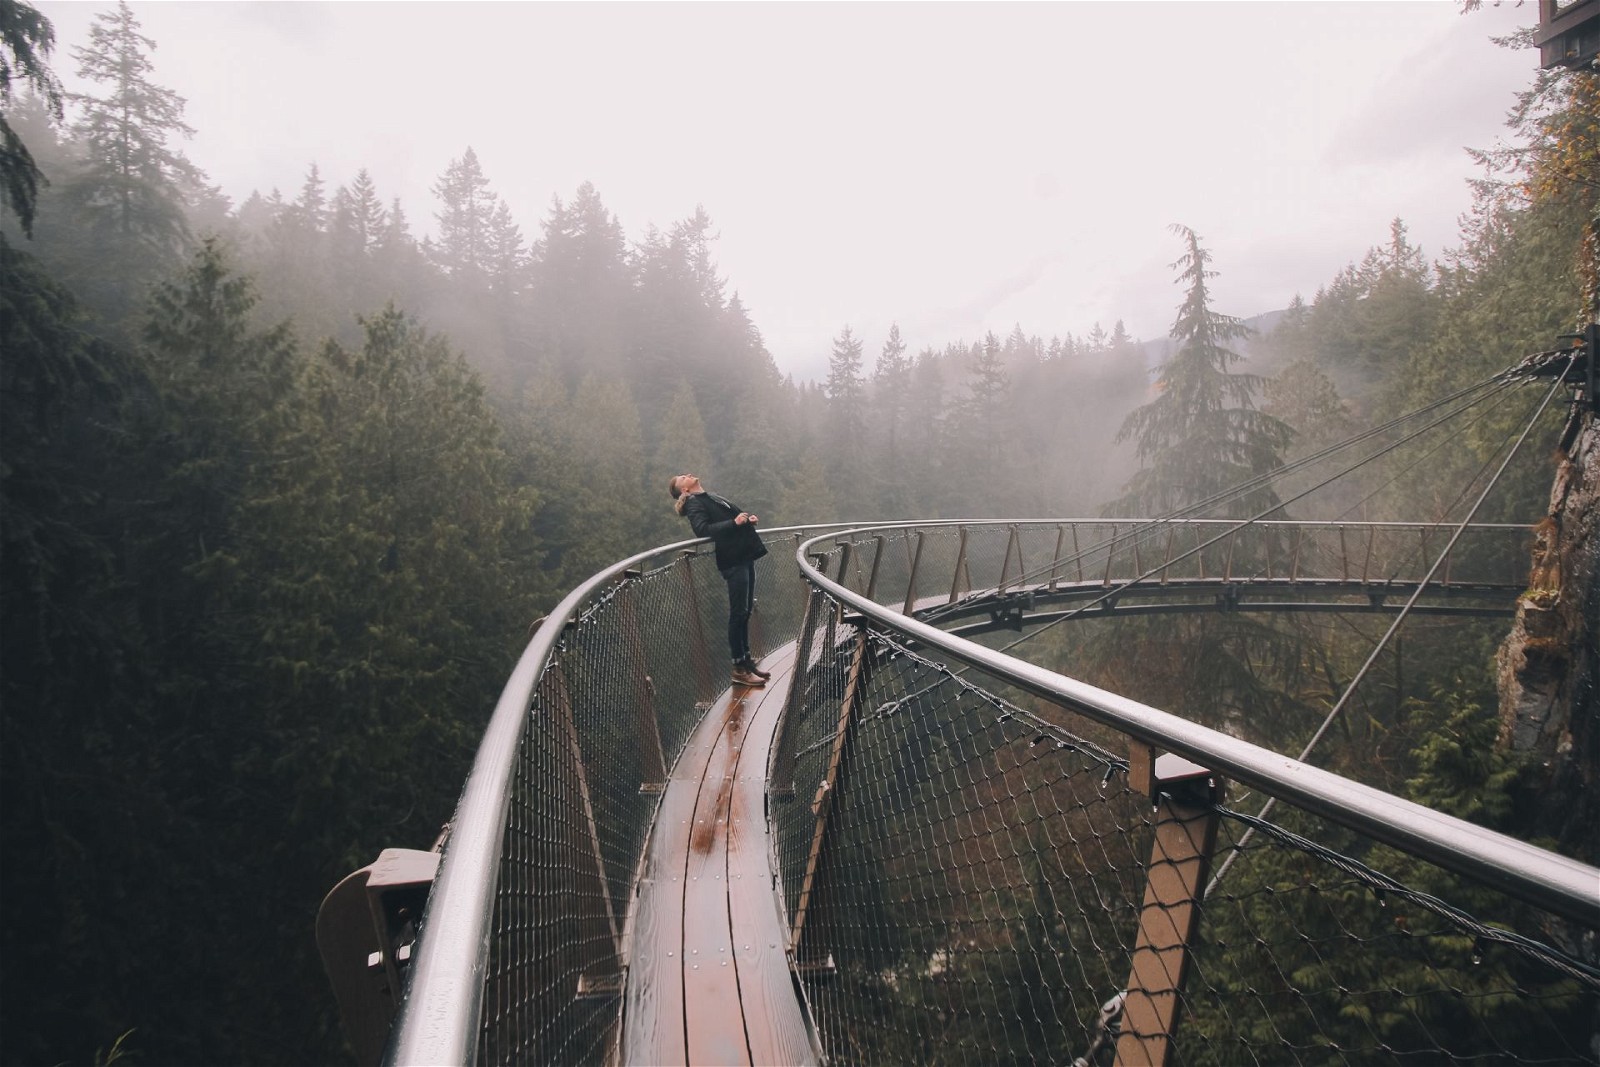  Capilano Suspension Bridge, one of Vancouver's most famous tourist attractions